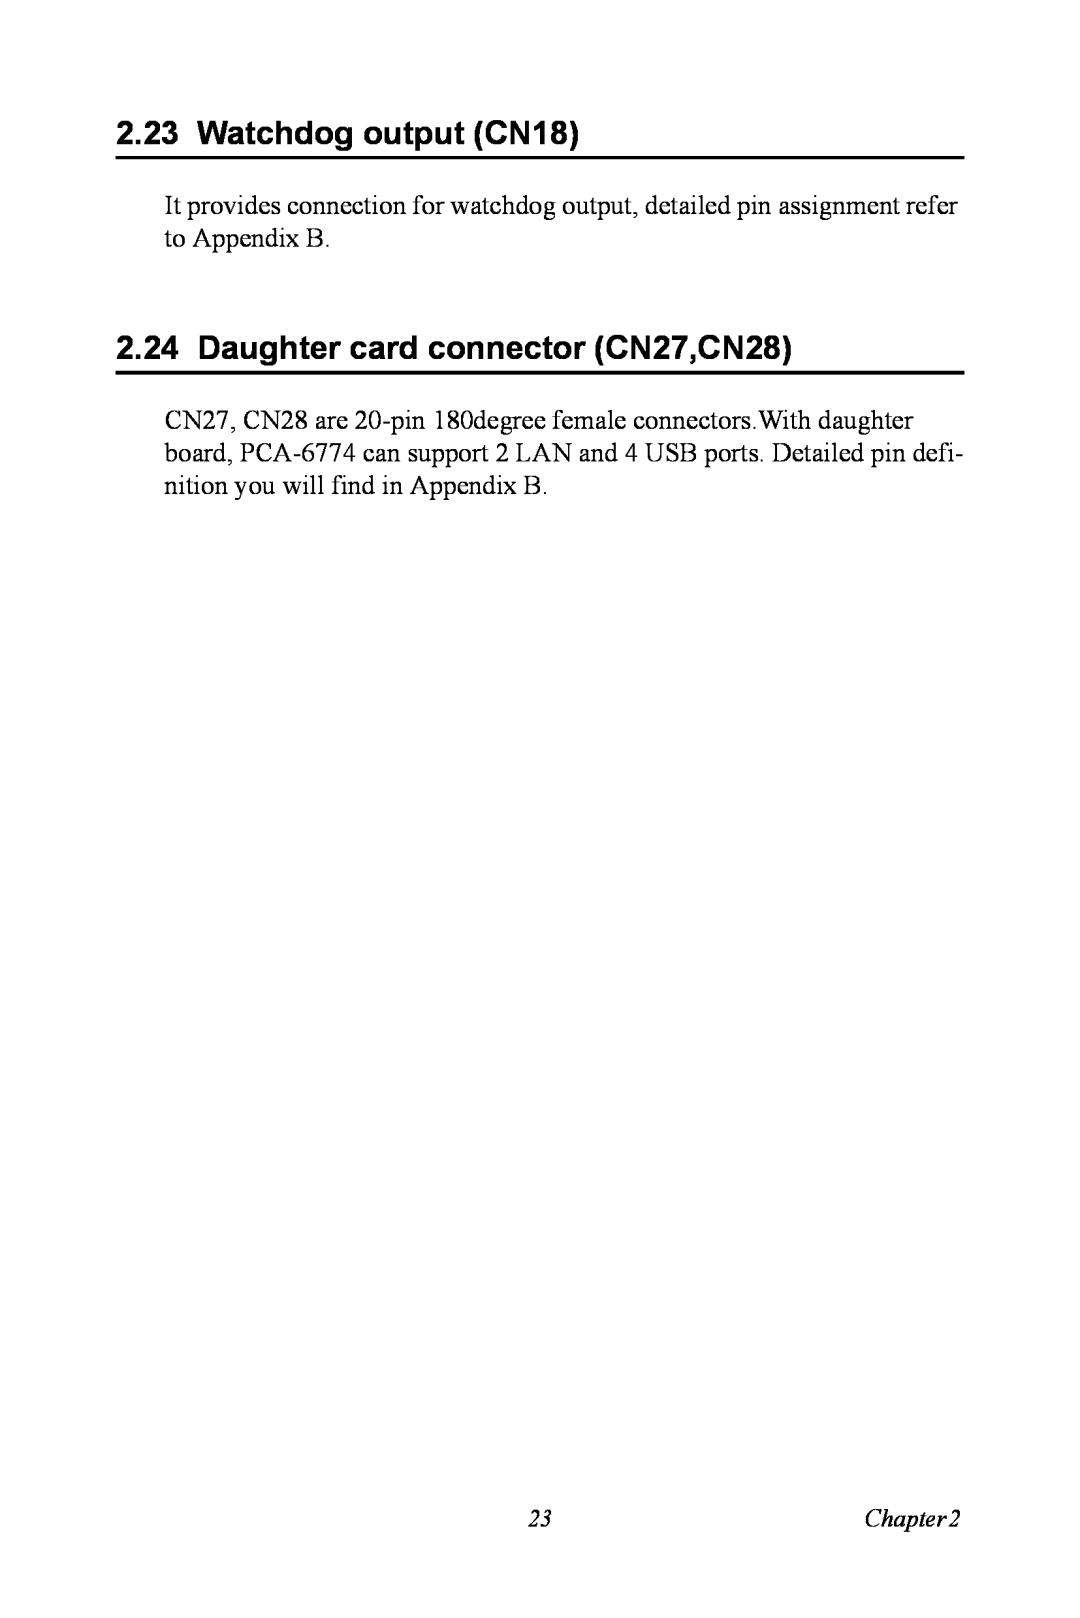 Advantech PCA-6774 user manual Watchdog output CN18, Daughter card connector CN27,CN28 